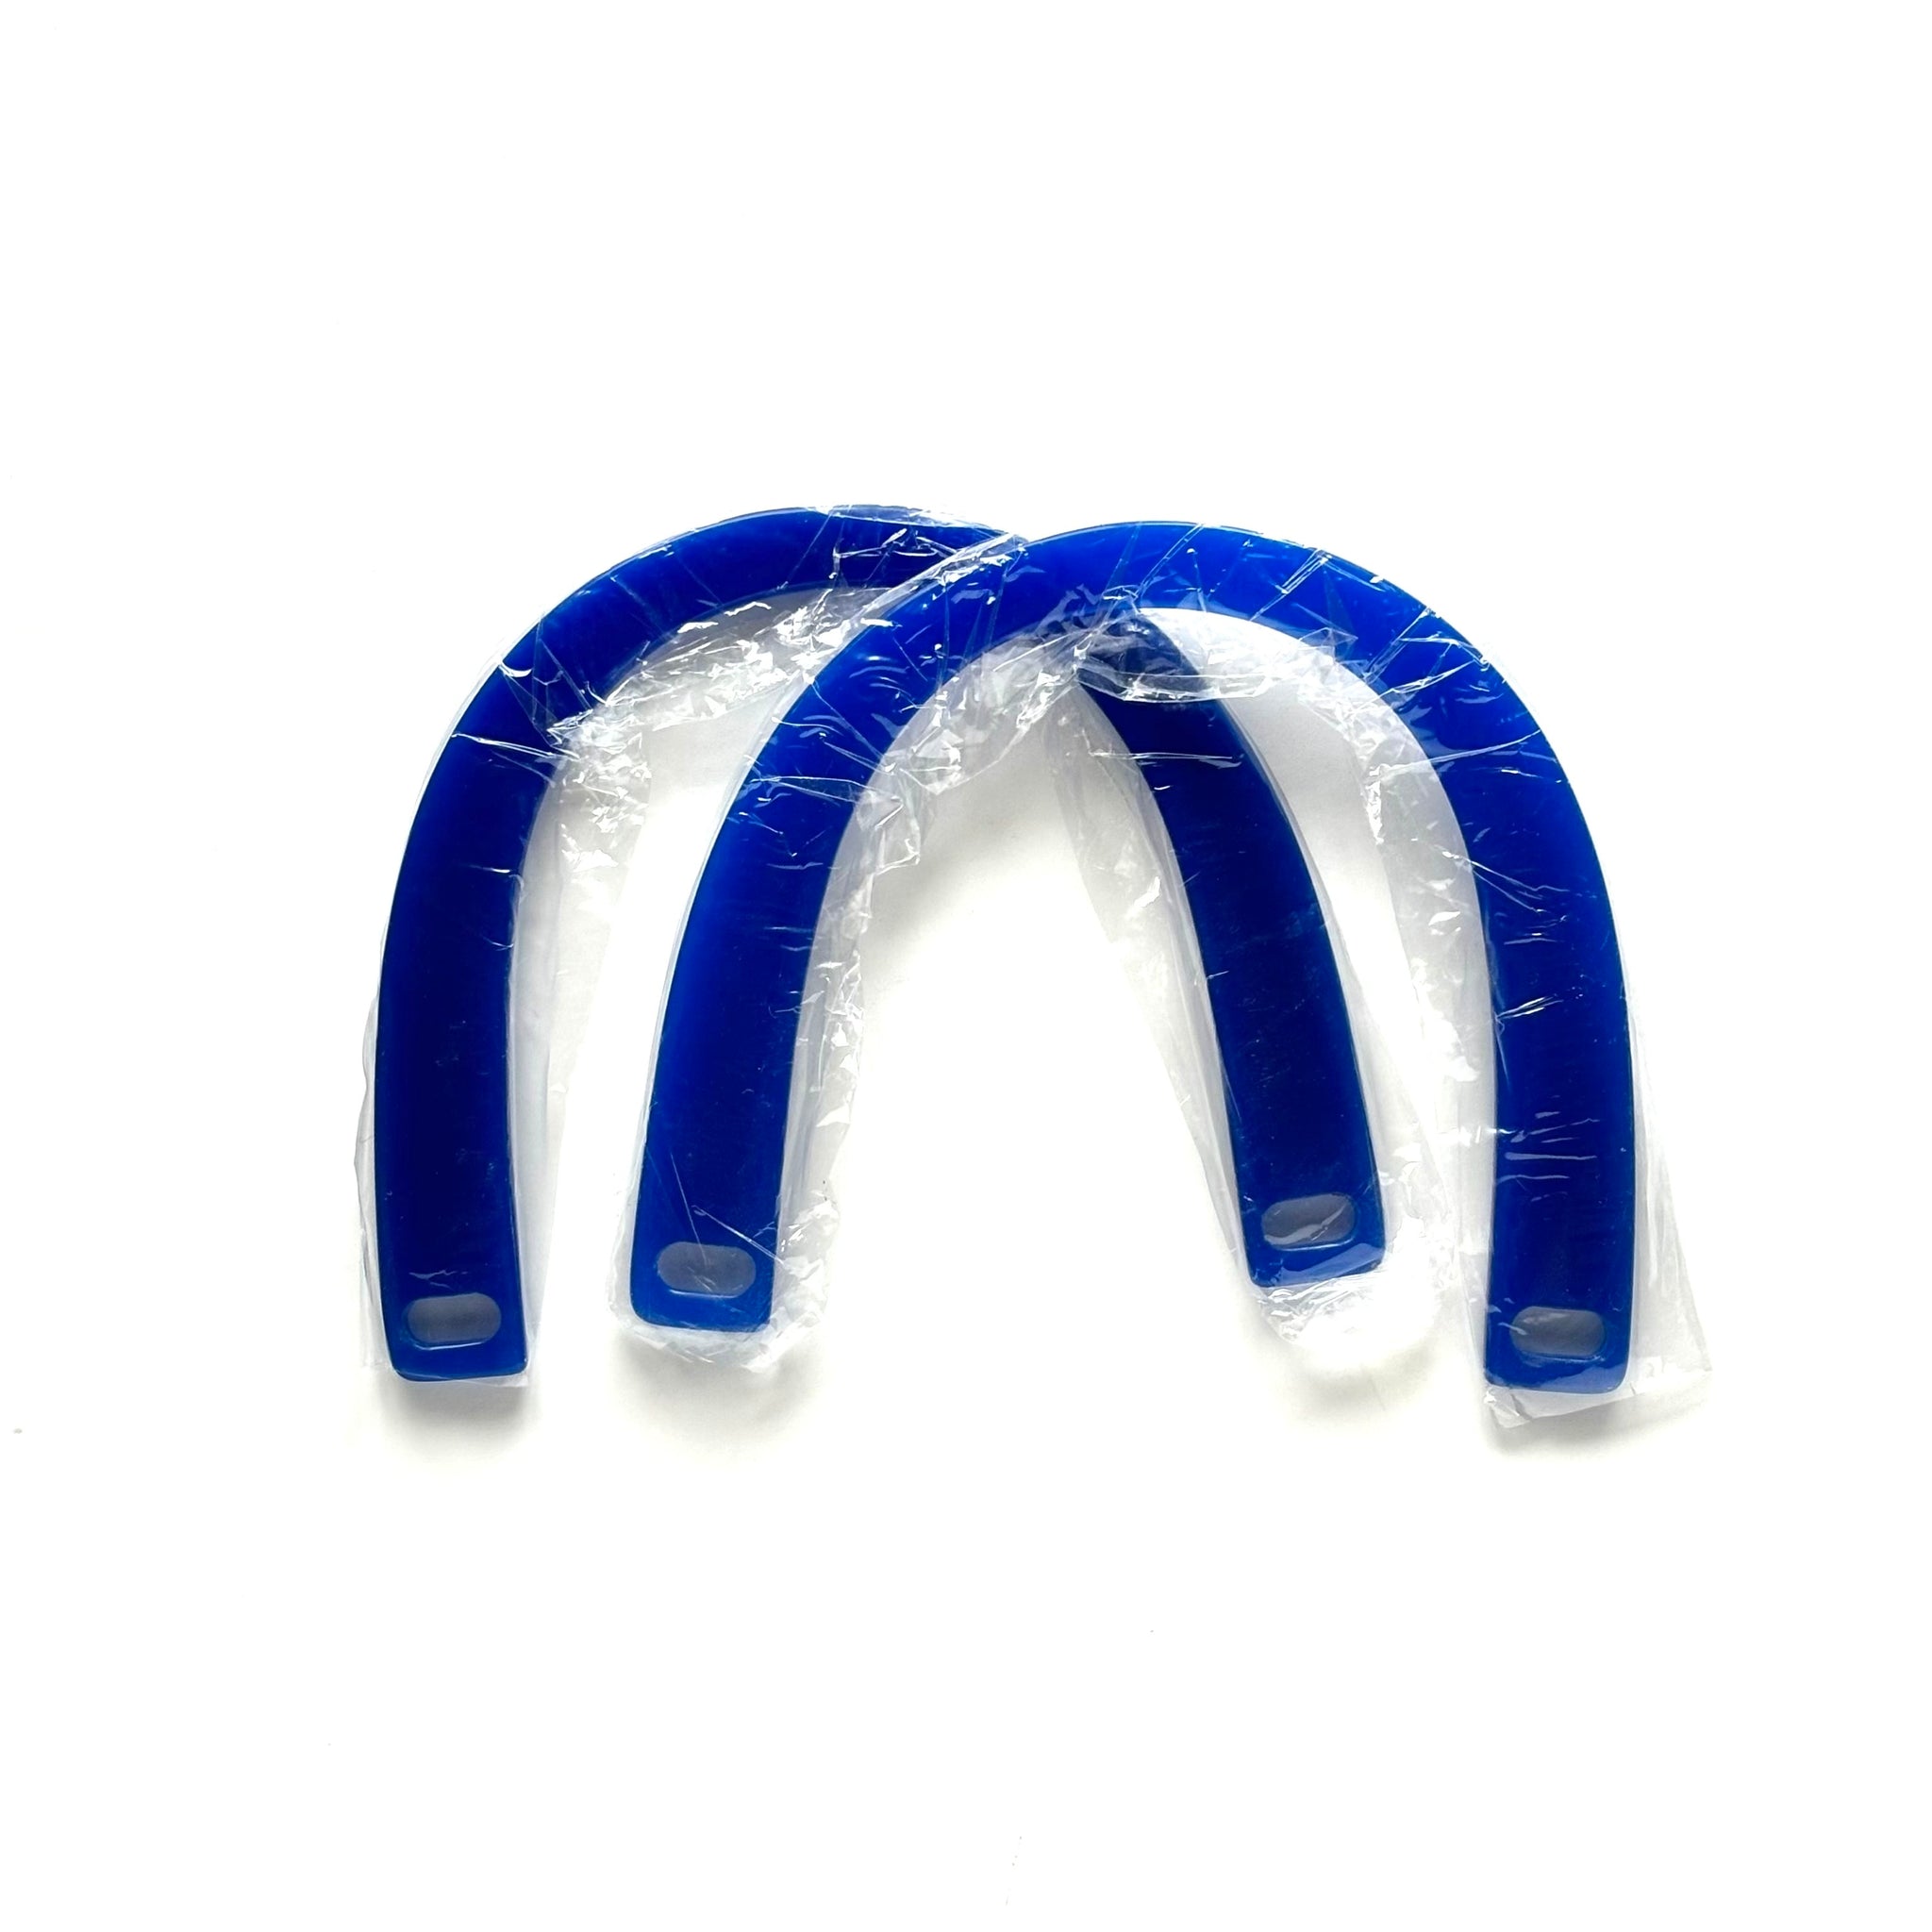 Pair of Blue Acrylic Purse Handles - for Needlepoint Handbag